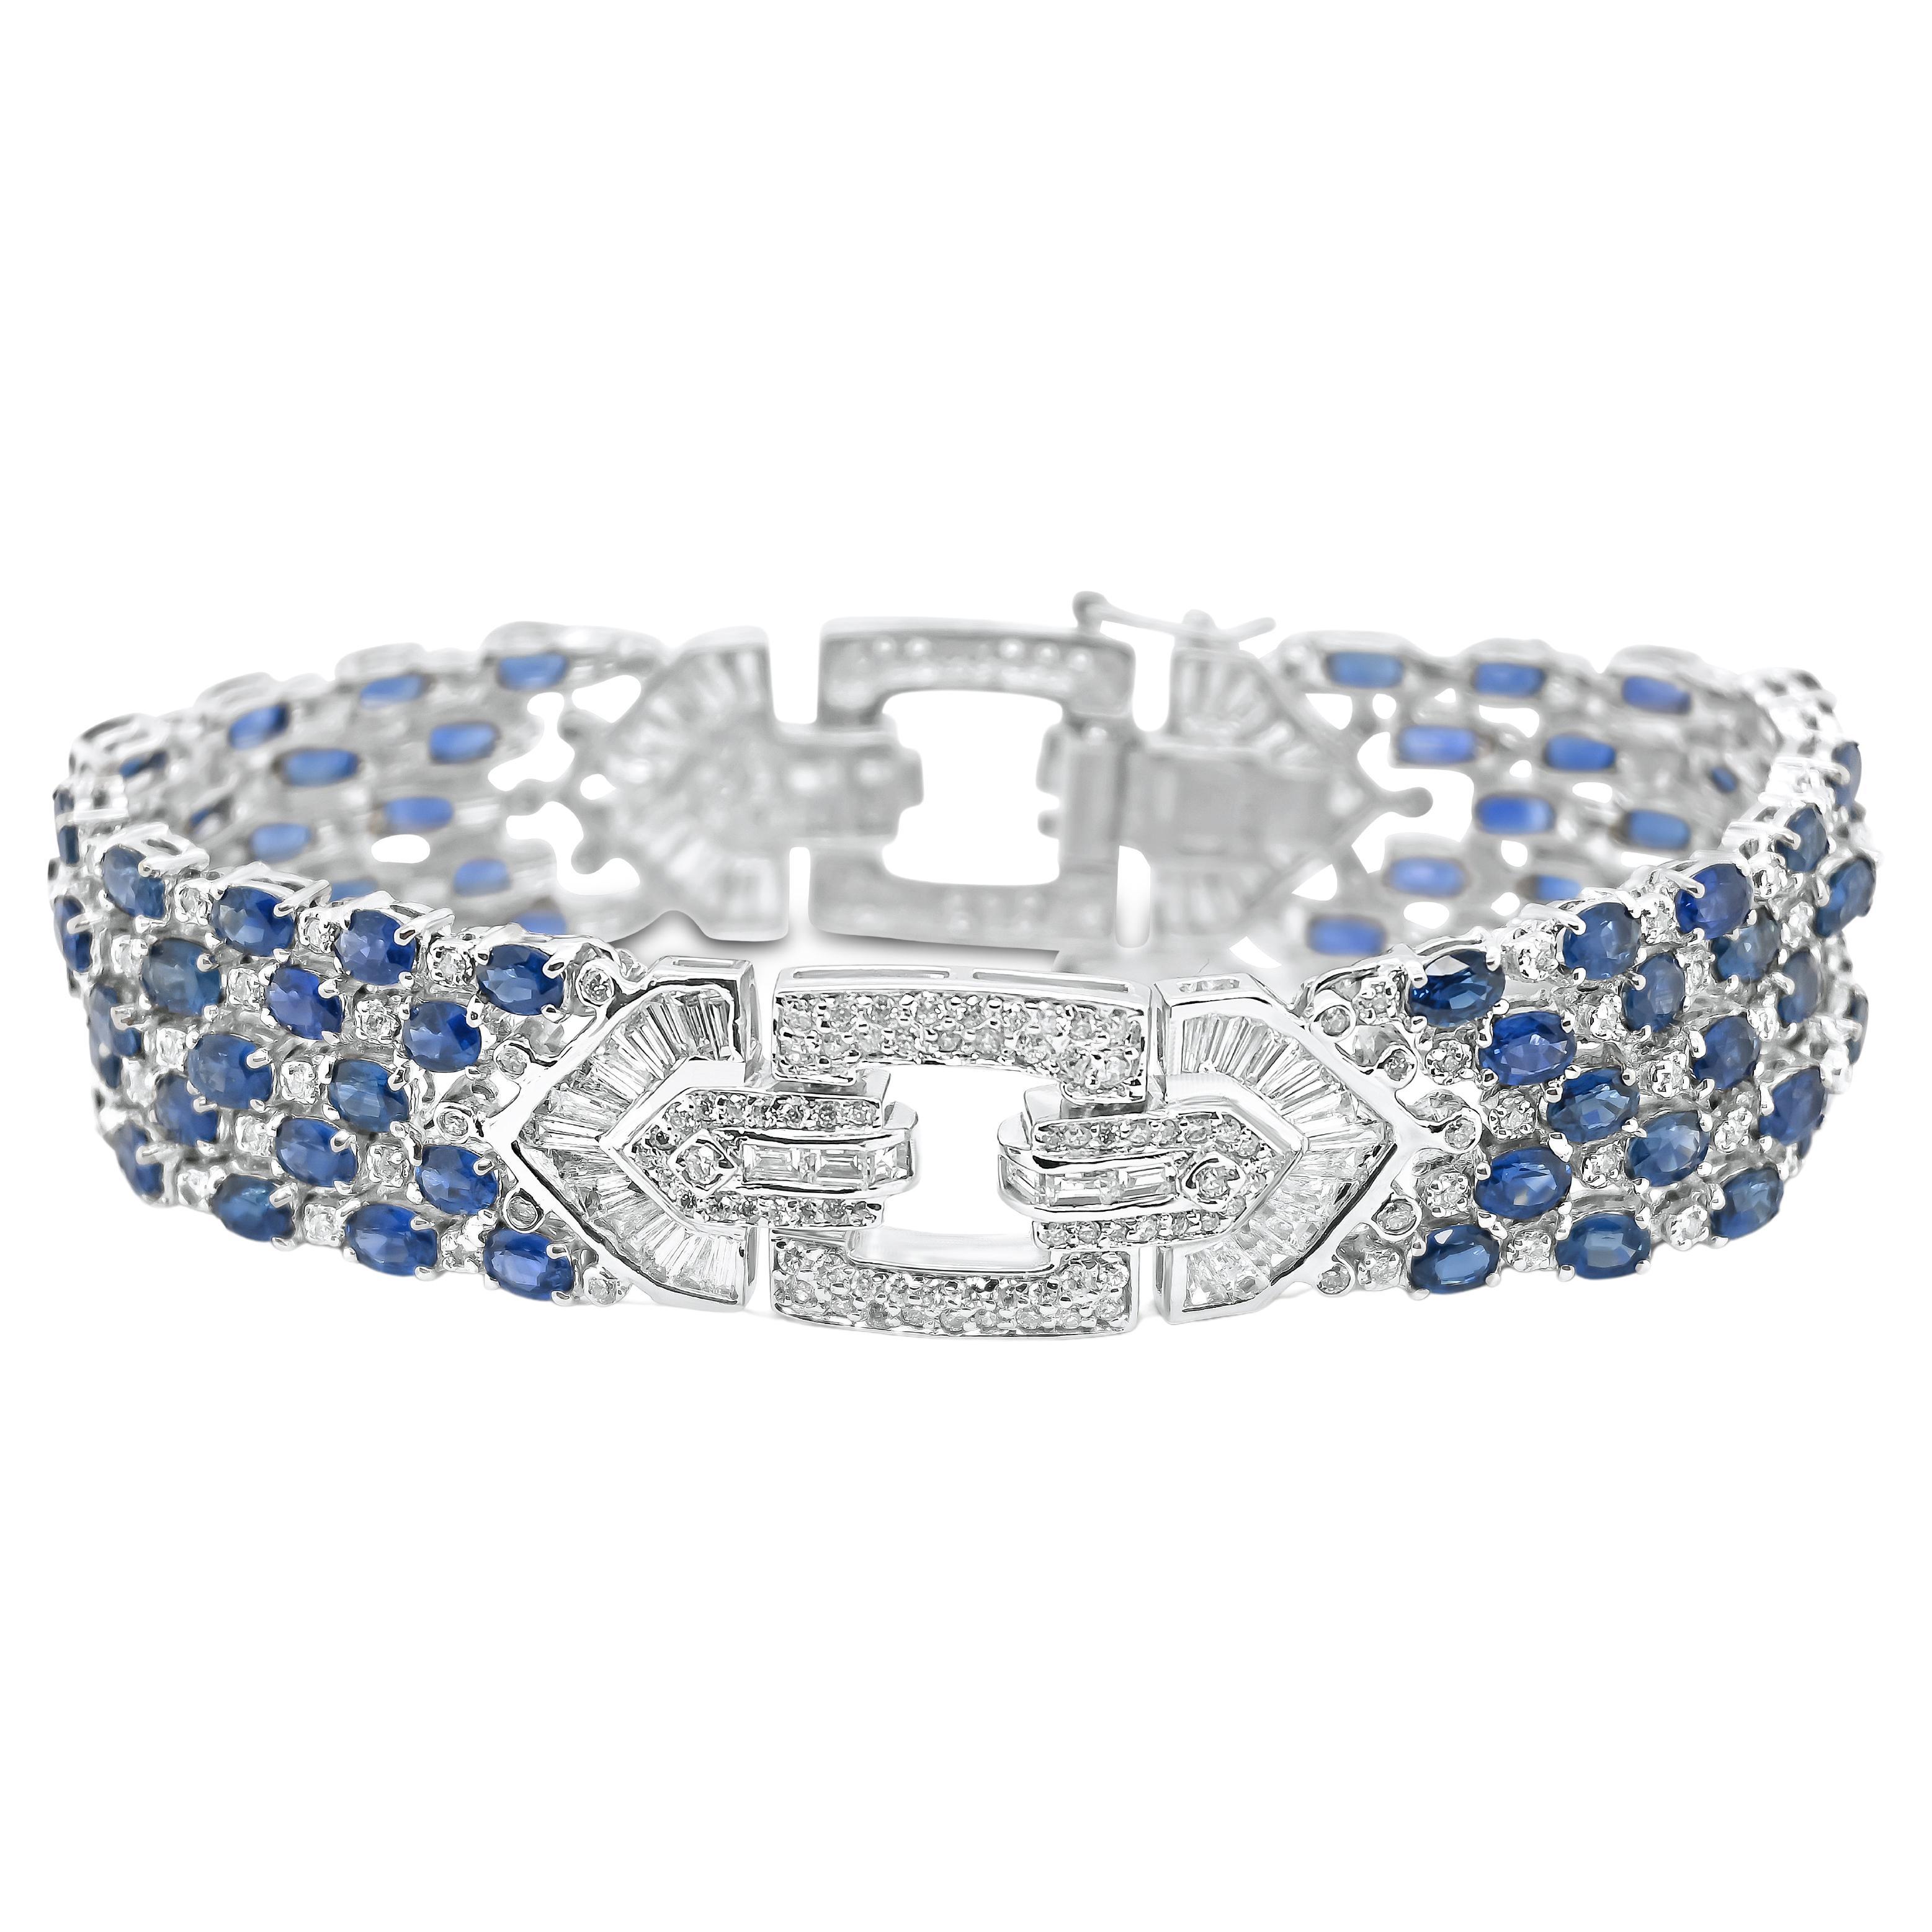 Unusual Art Deco Diamond and Sapphire Bracelet at 1stDibs